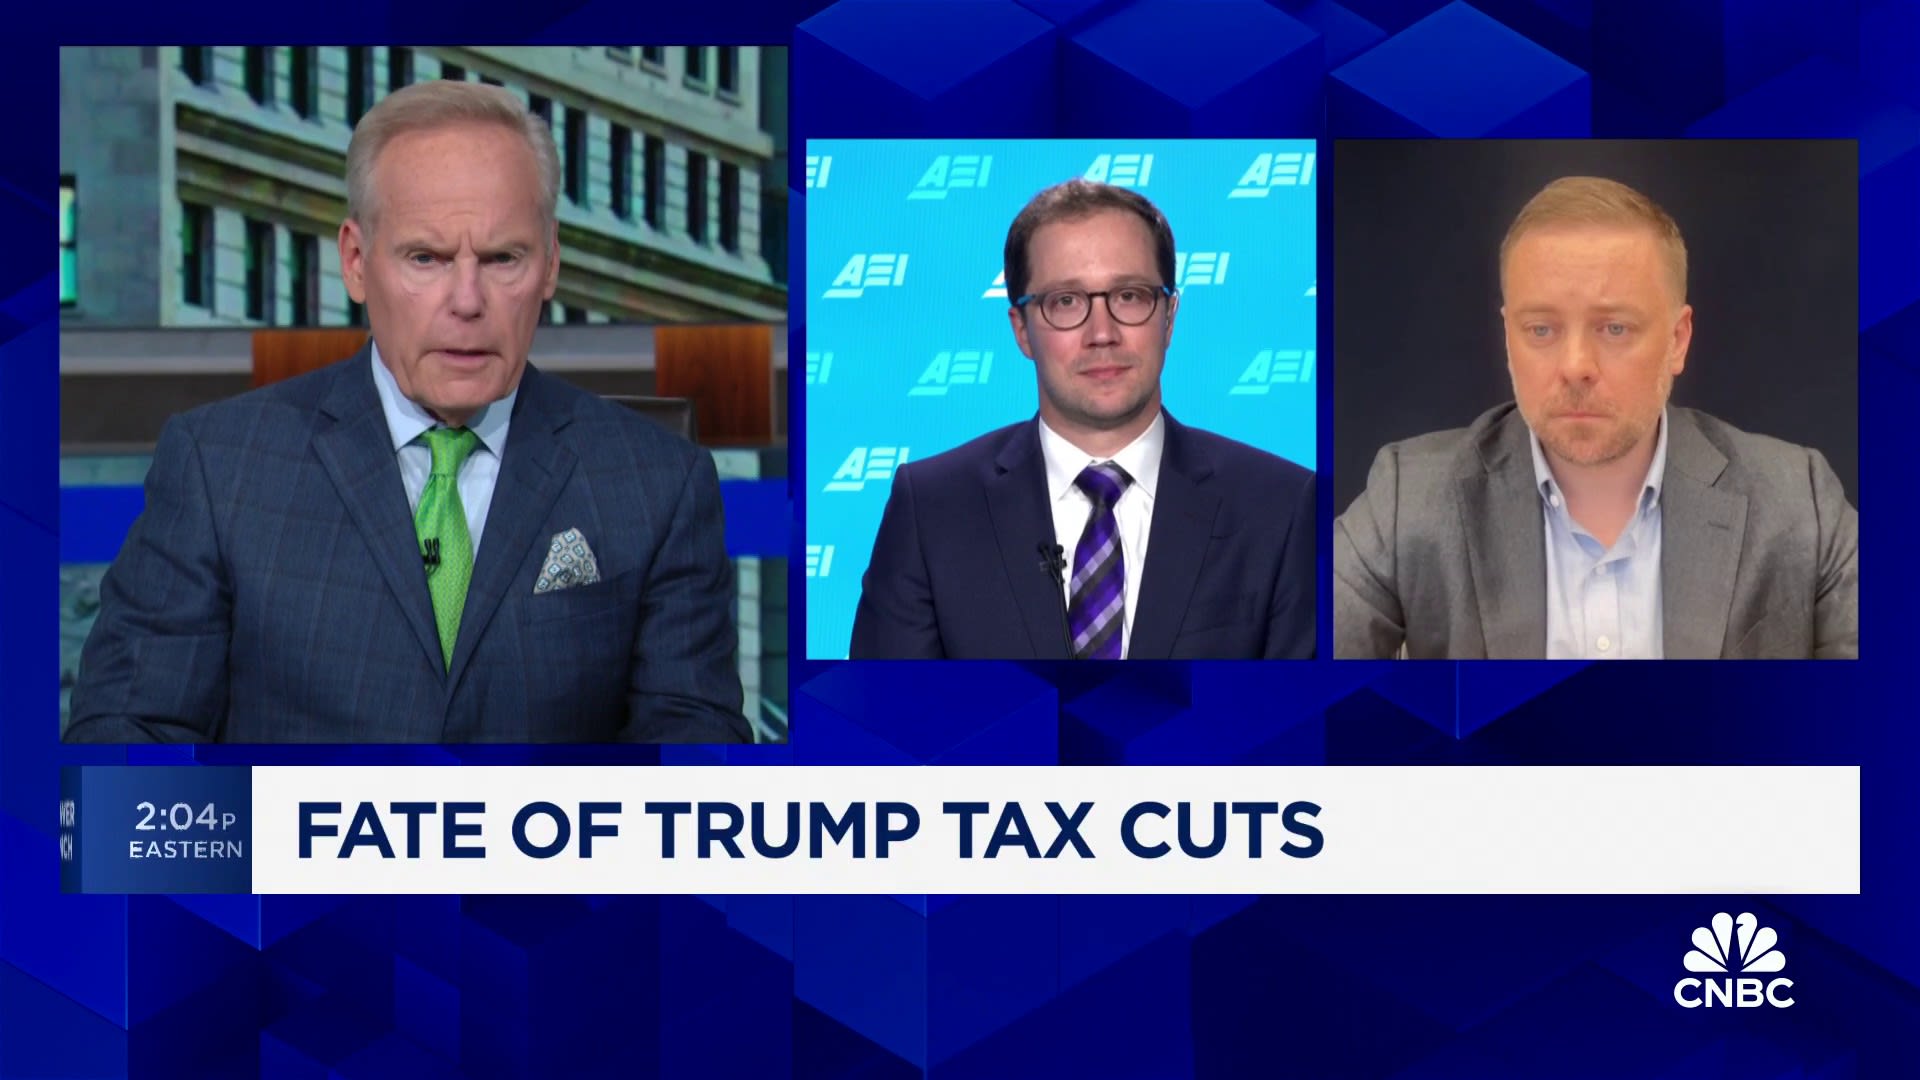 Fate of Trump tax cuts